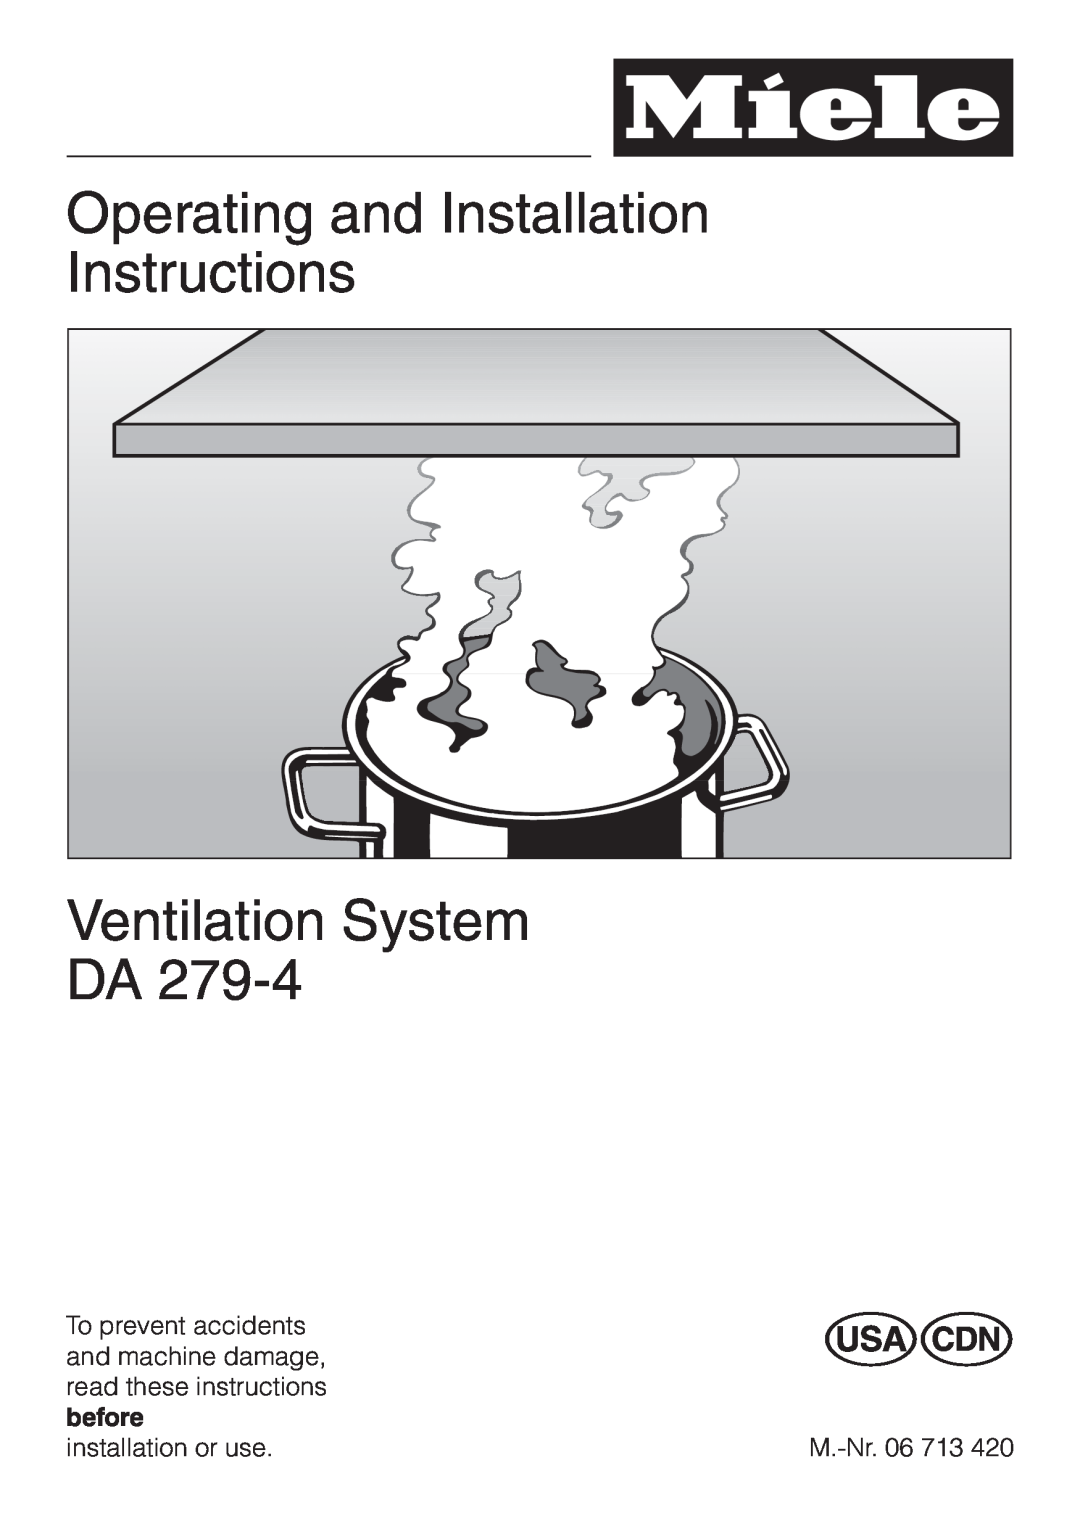 Miele DA 279-4 installation instructions Operating and Installation Instructions, Ventilation System DA 